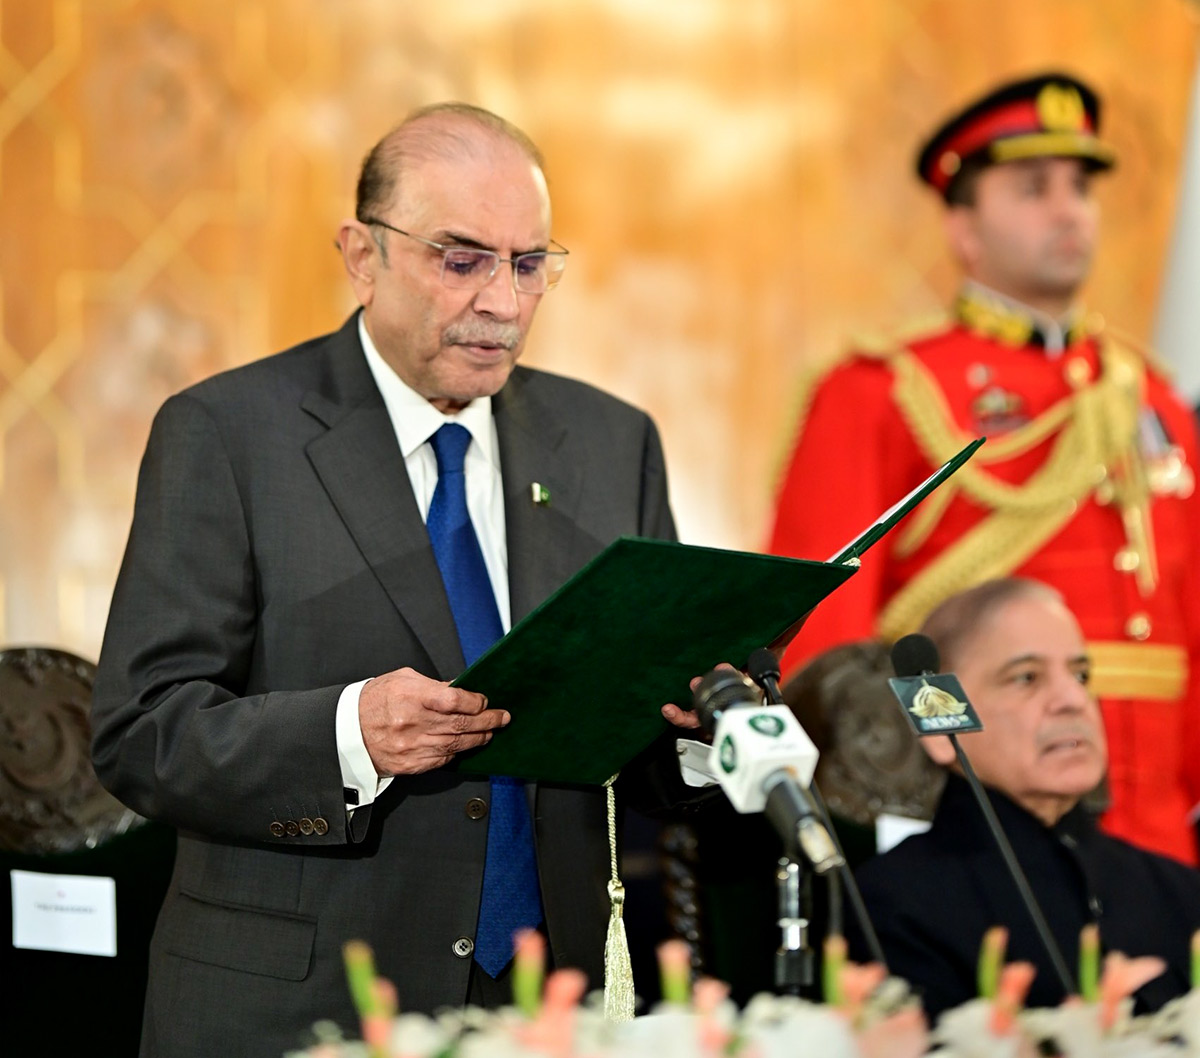 Pakistan's new President Zardari to forgo salary, here's why